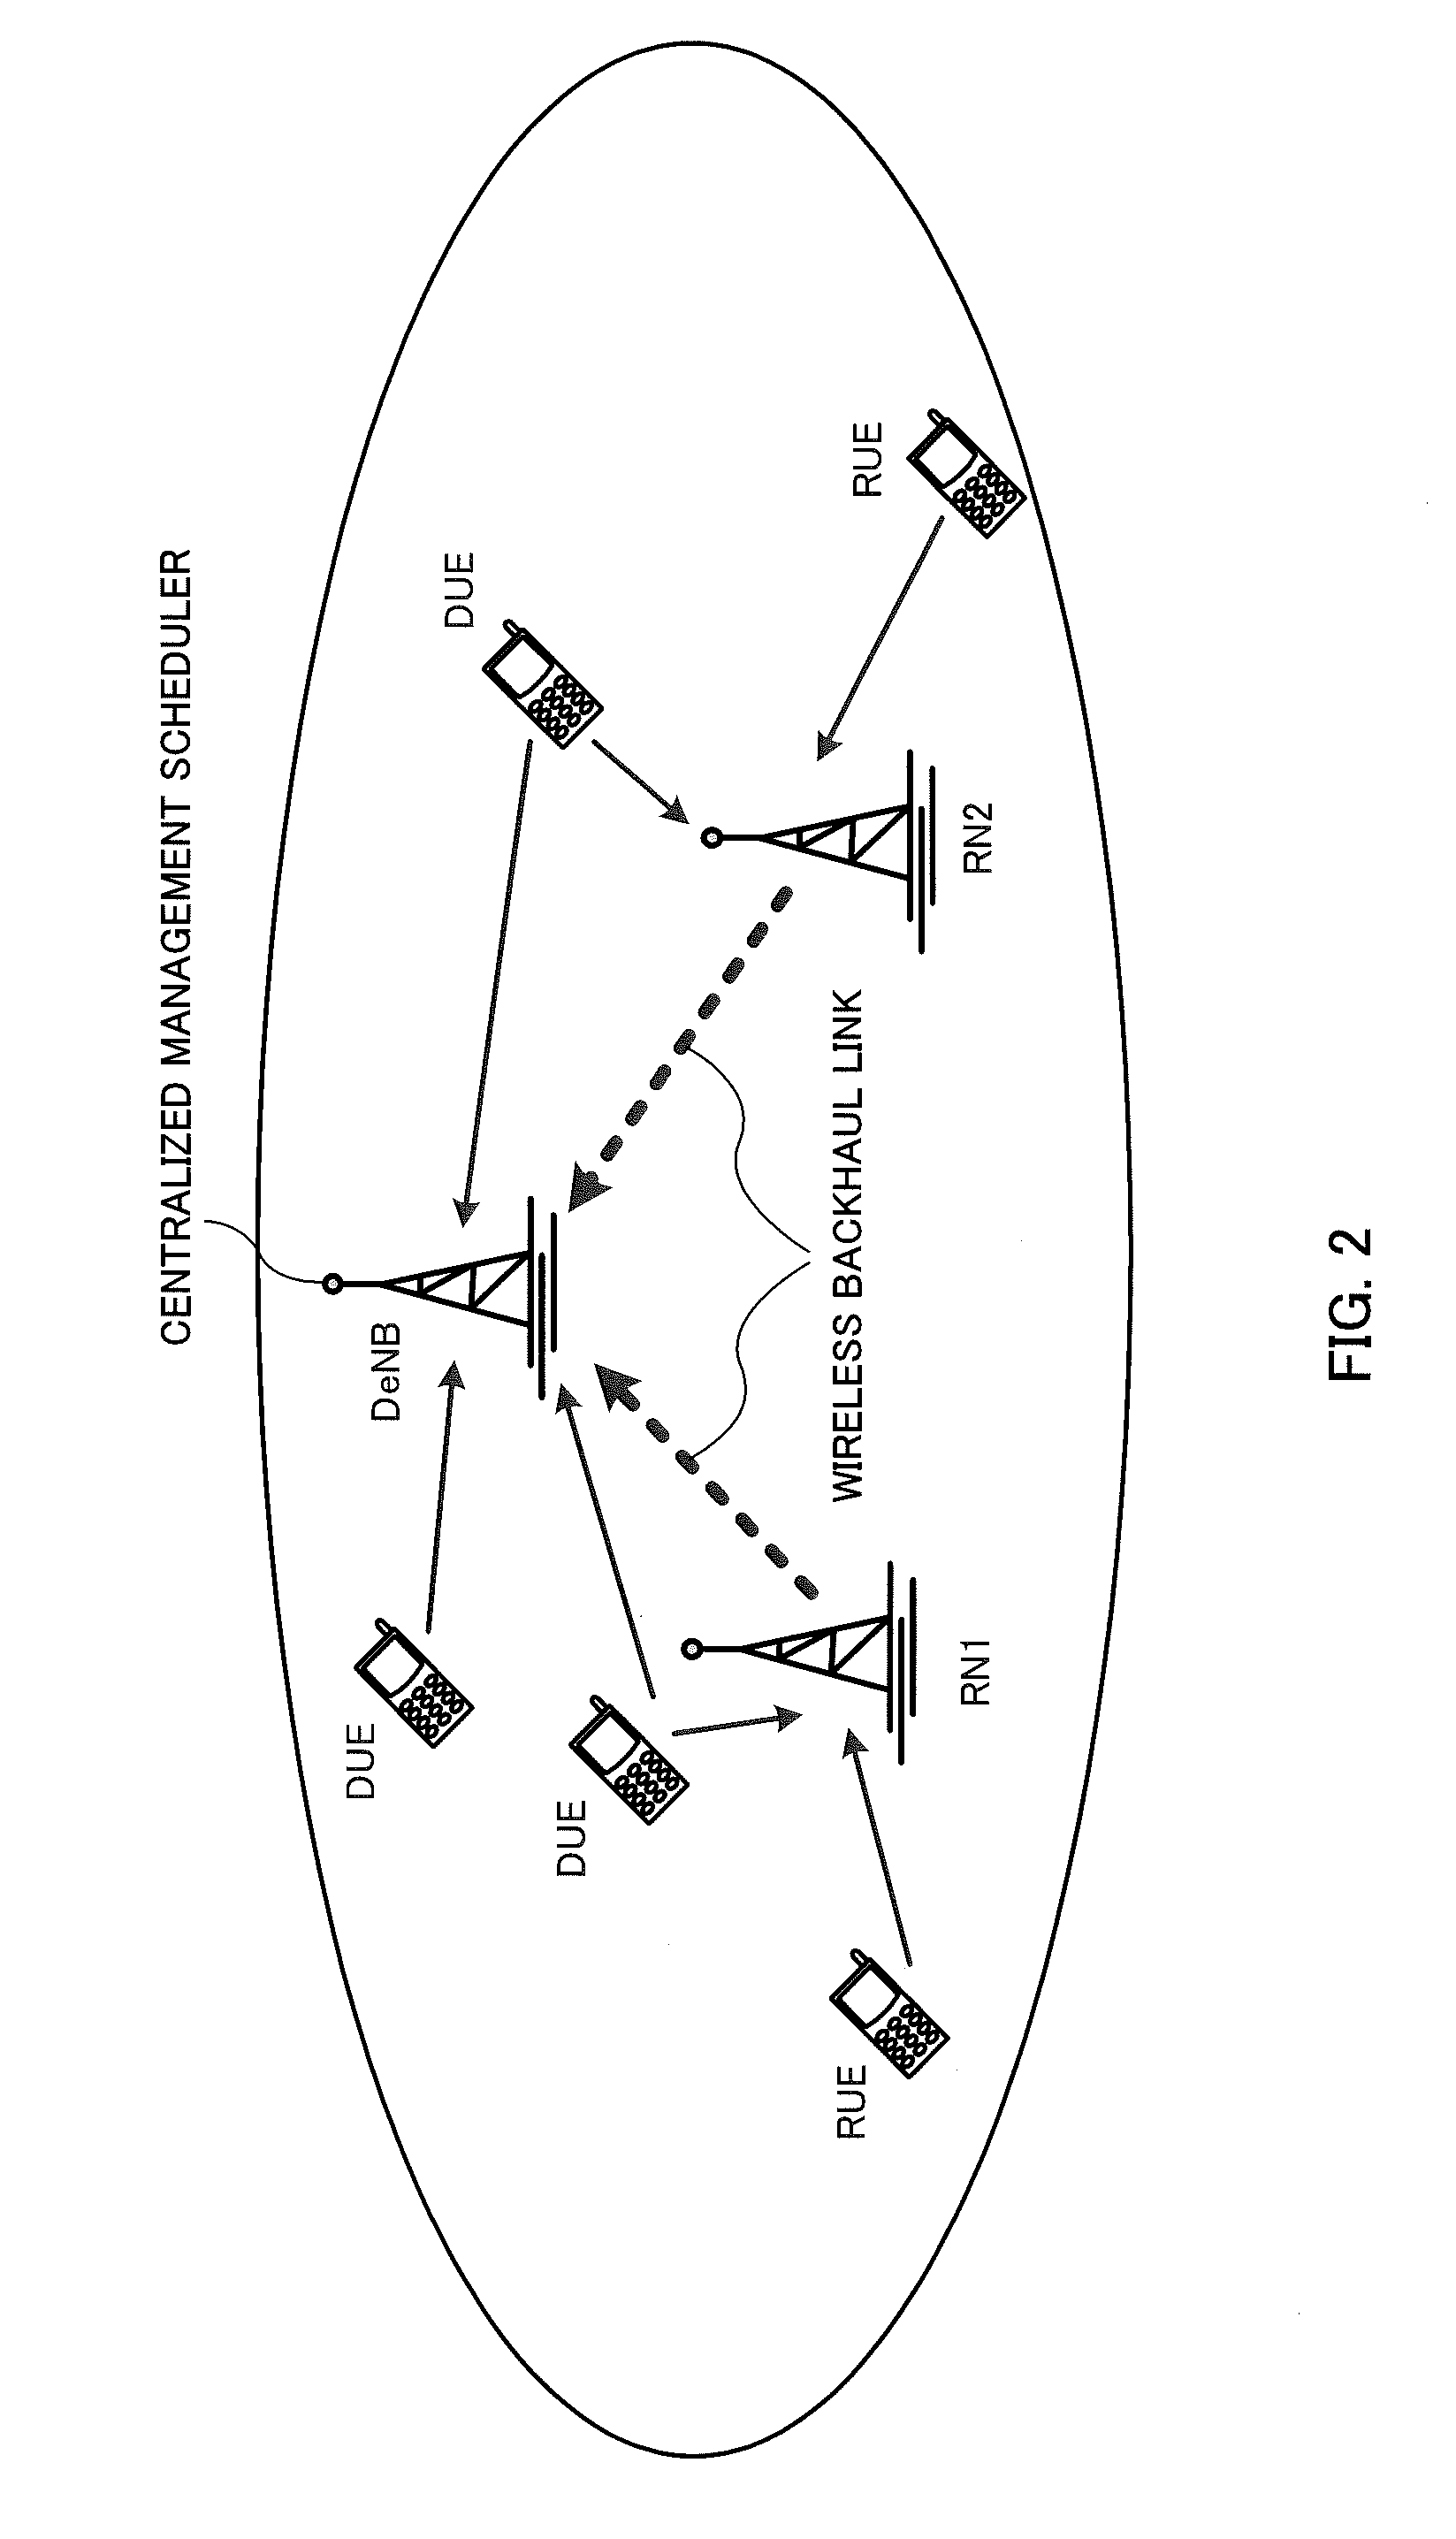 Radio relay station apparatus, radio base station apparatus and radio communication method